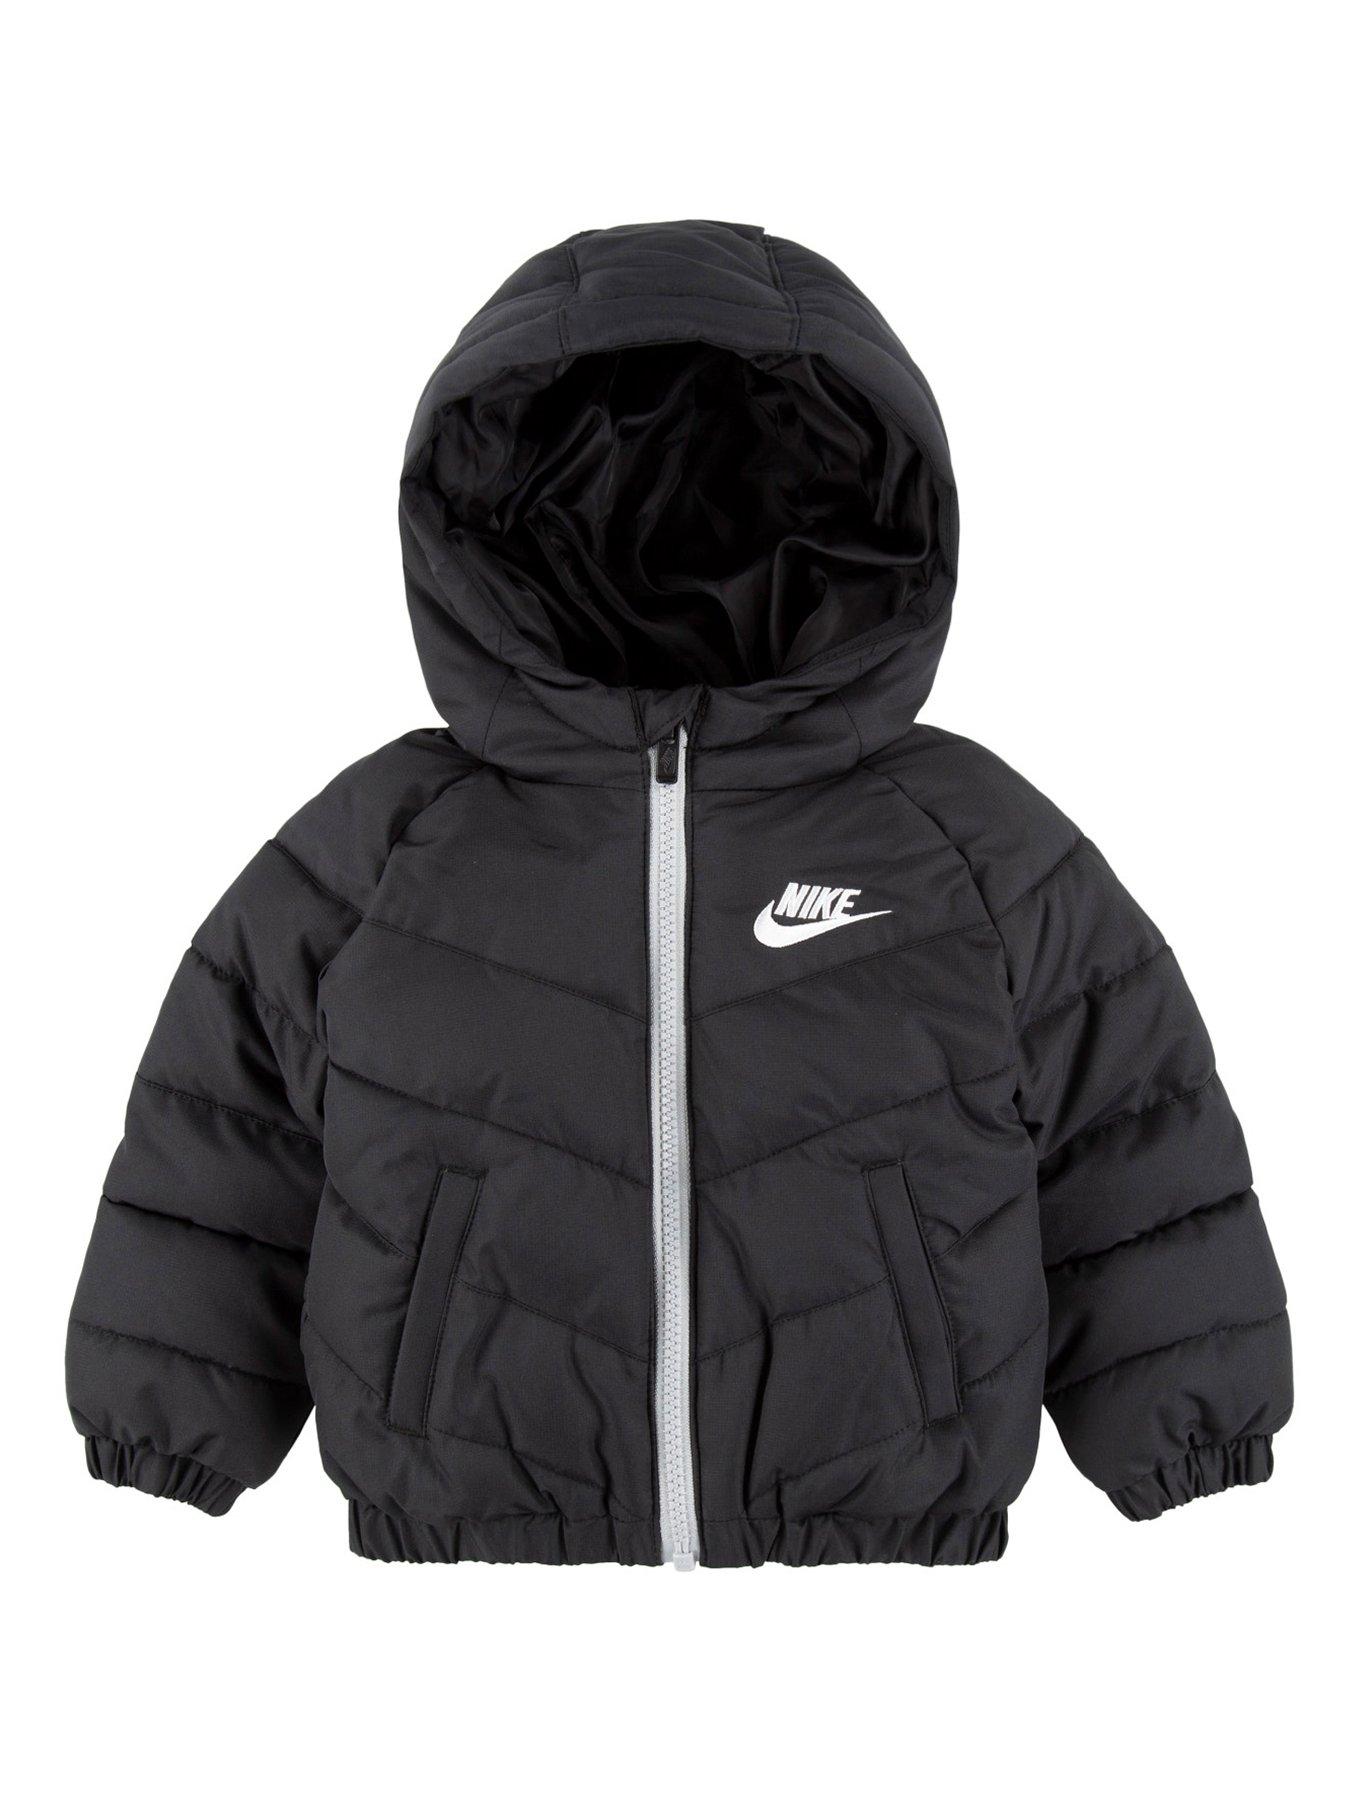 | Coats & jackets | Kids & sports clothing | & leisure | Very Ireland